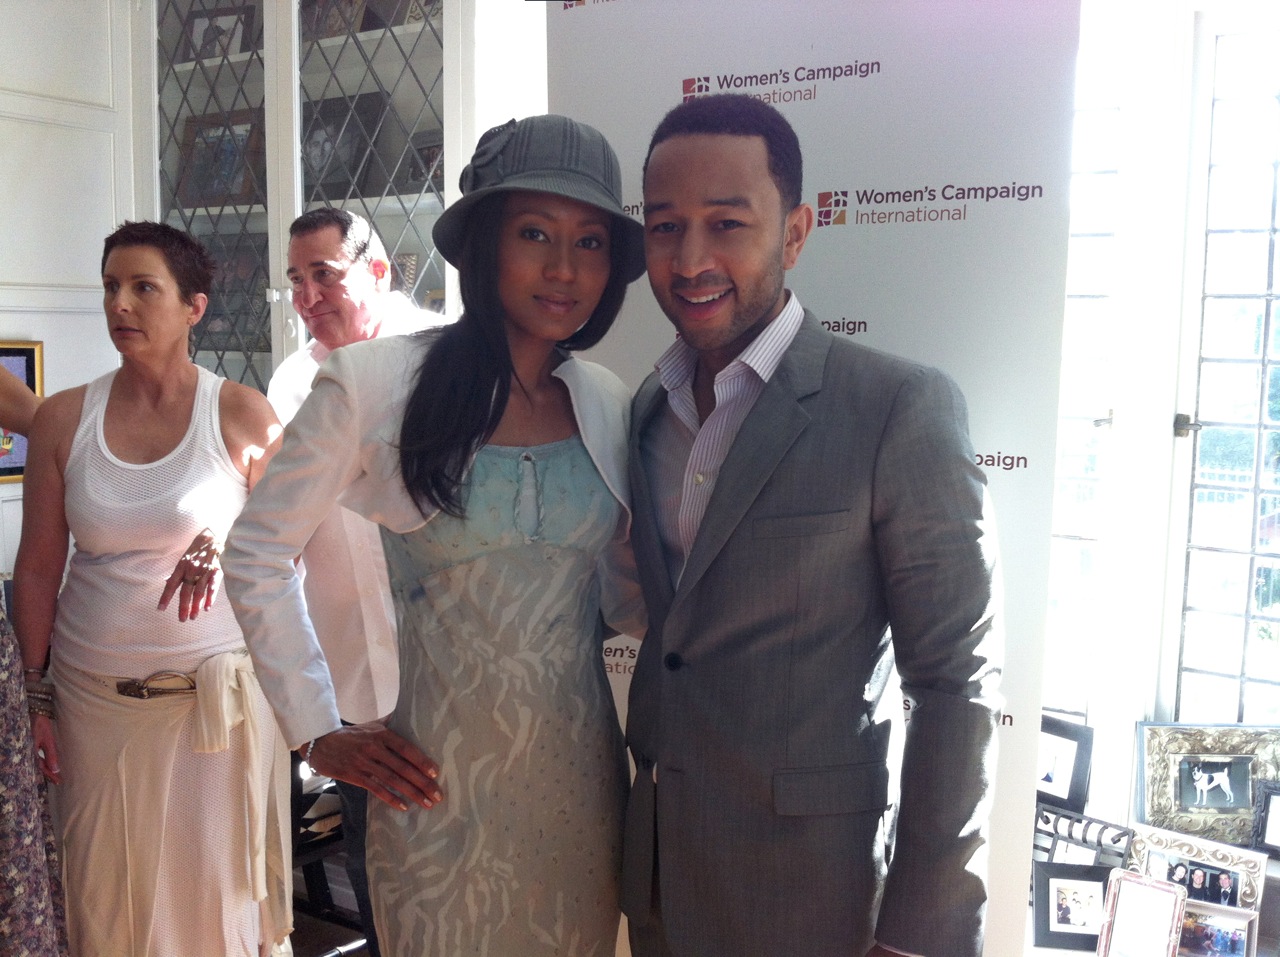 Vaja & John Legend at the Womens Campaign International Charity Event